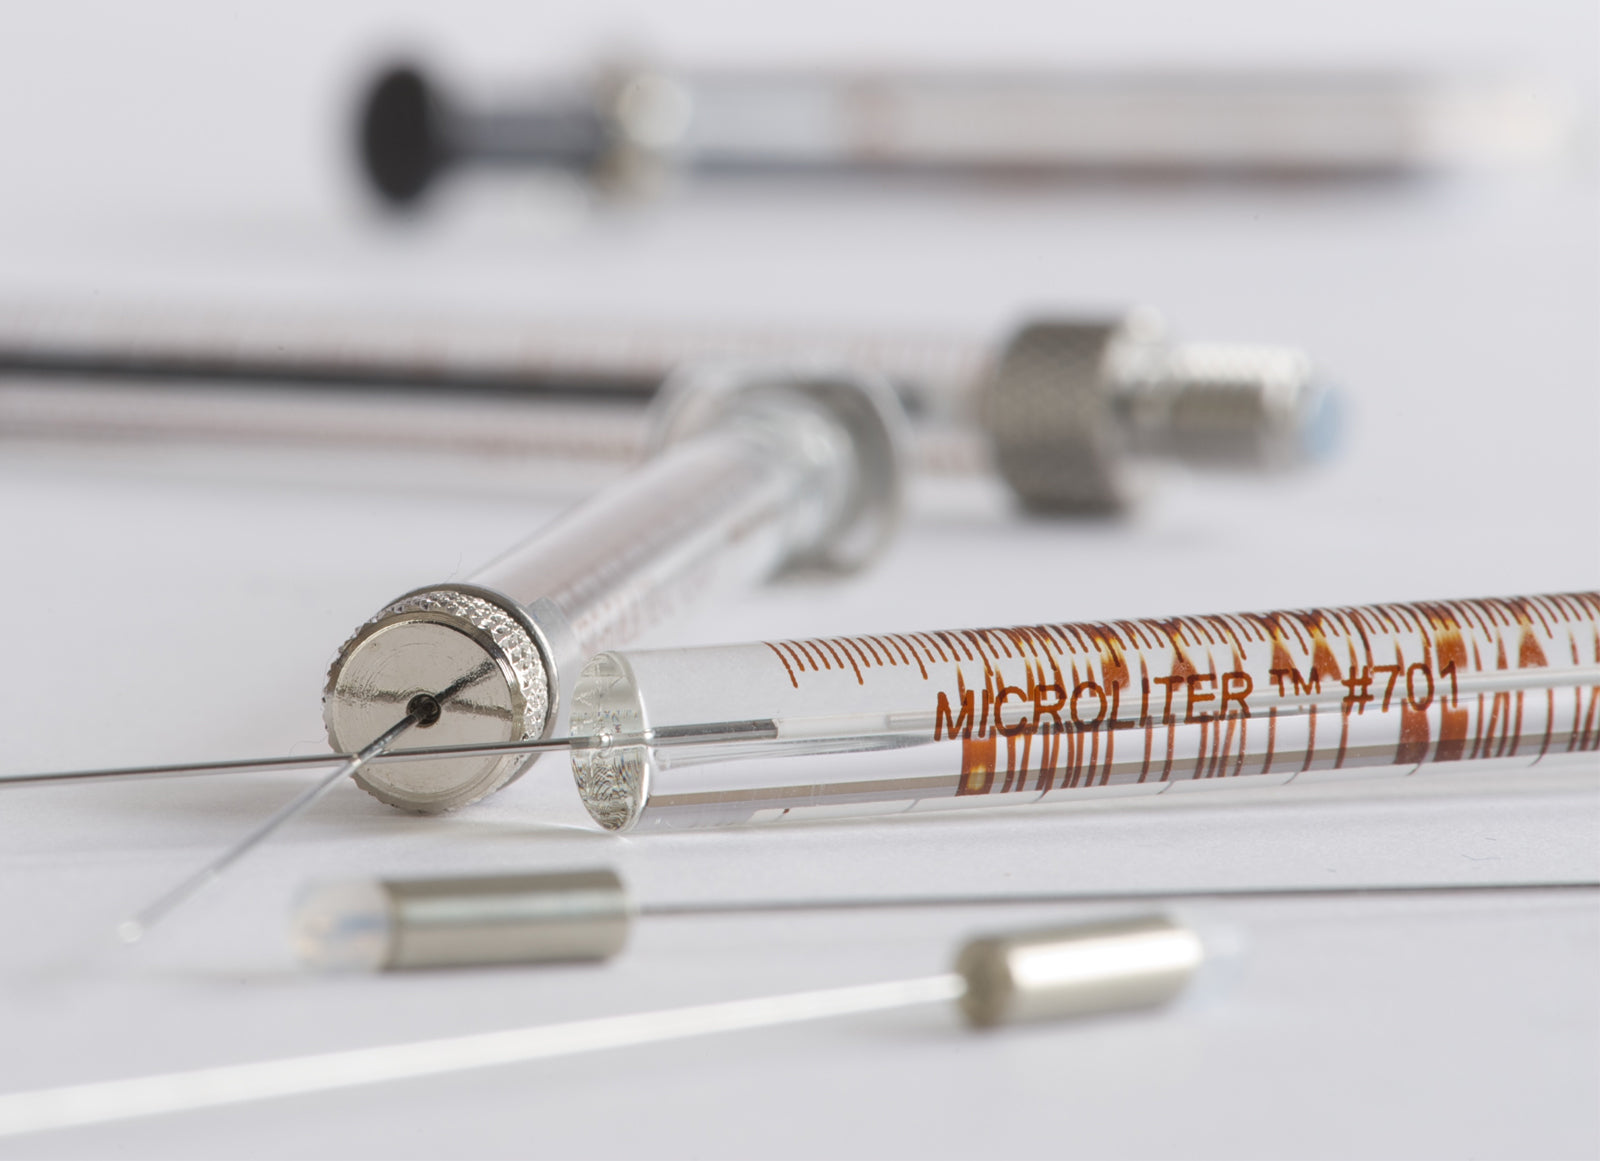 All Hamilton Company Microliter Syringes